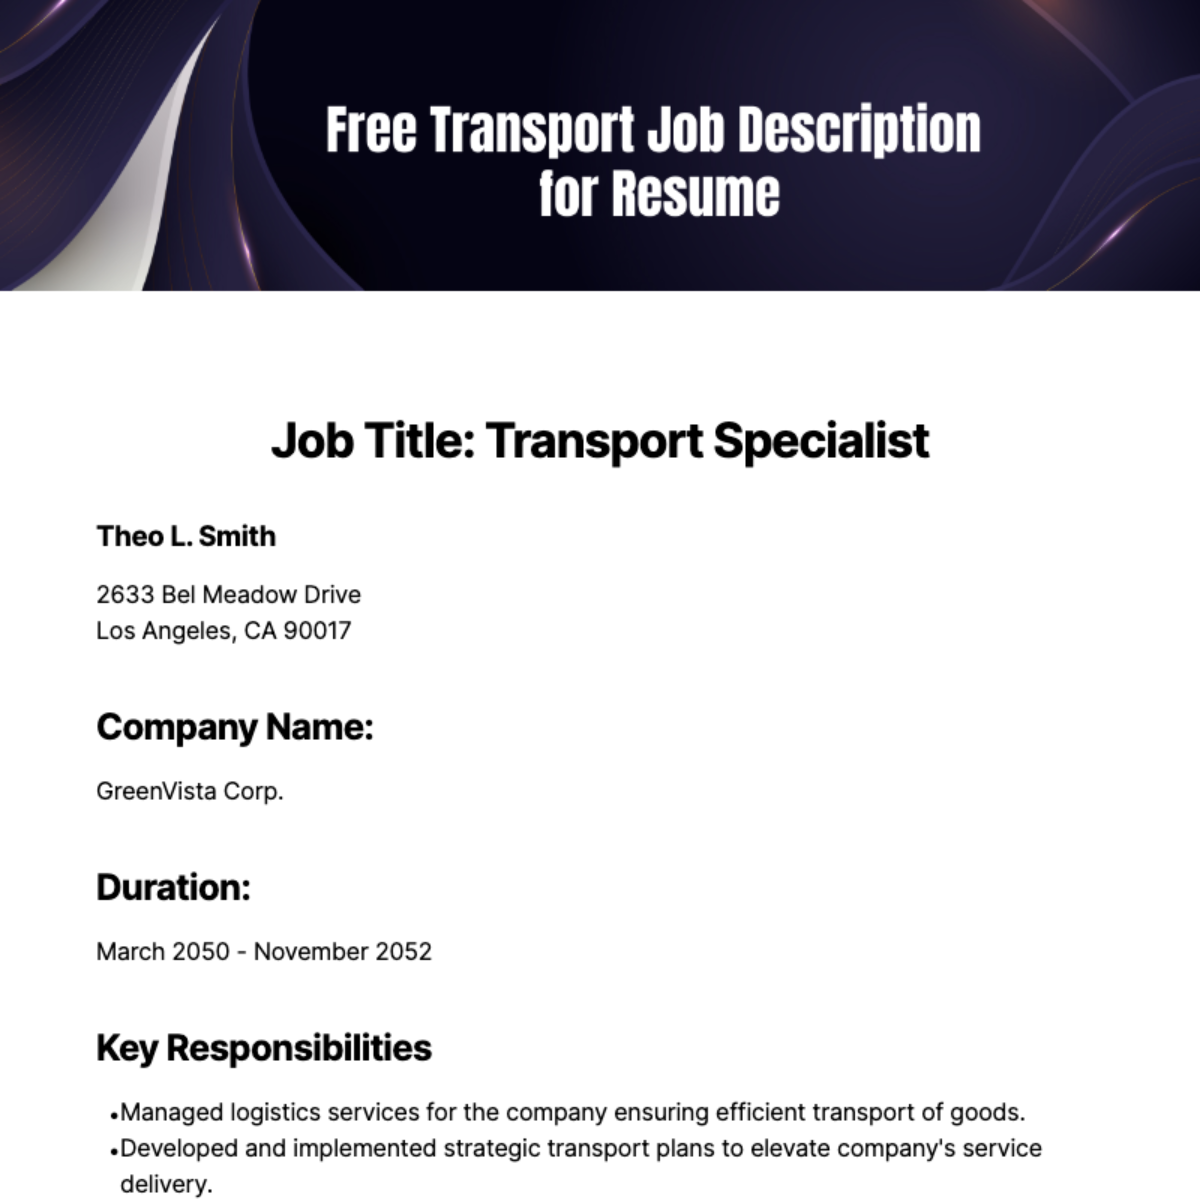 Transport Job Description for Resume Template